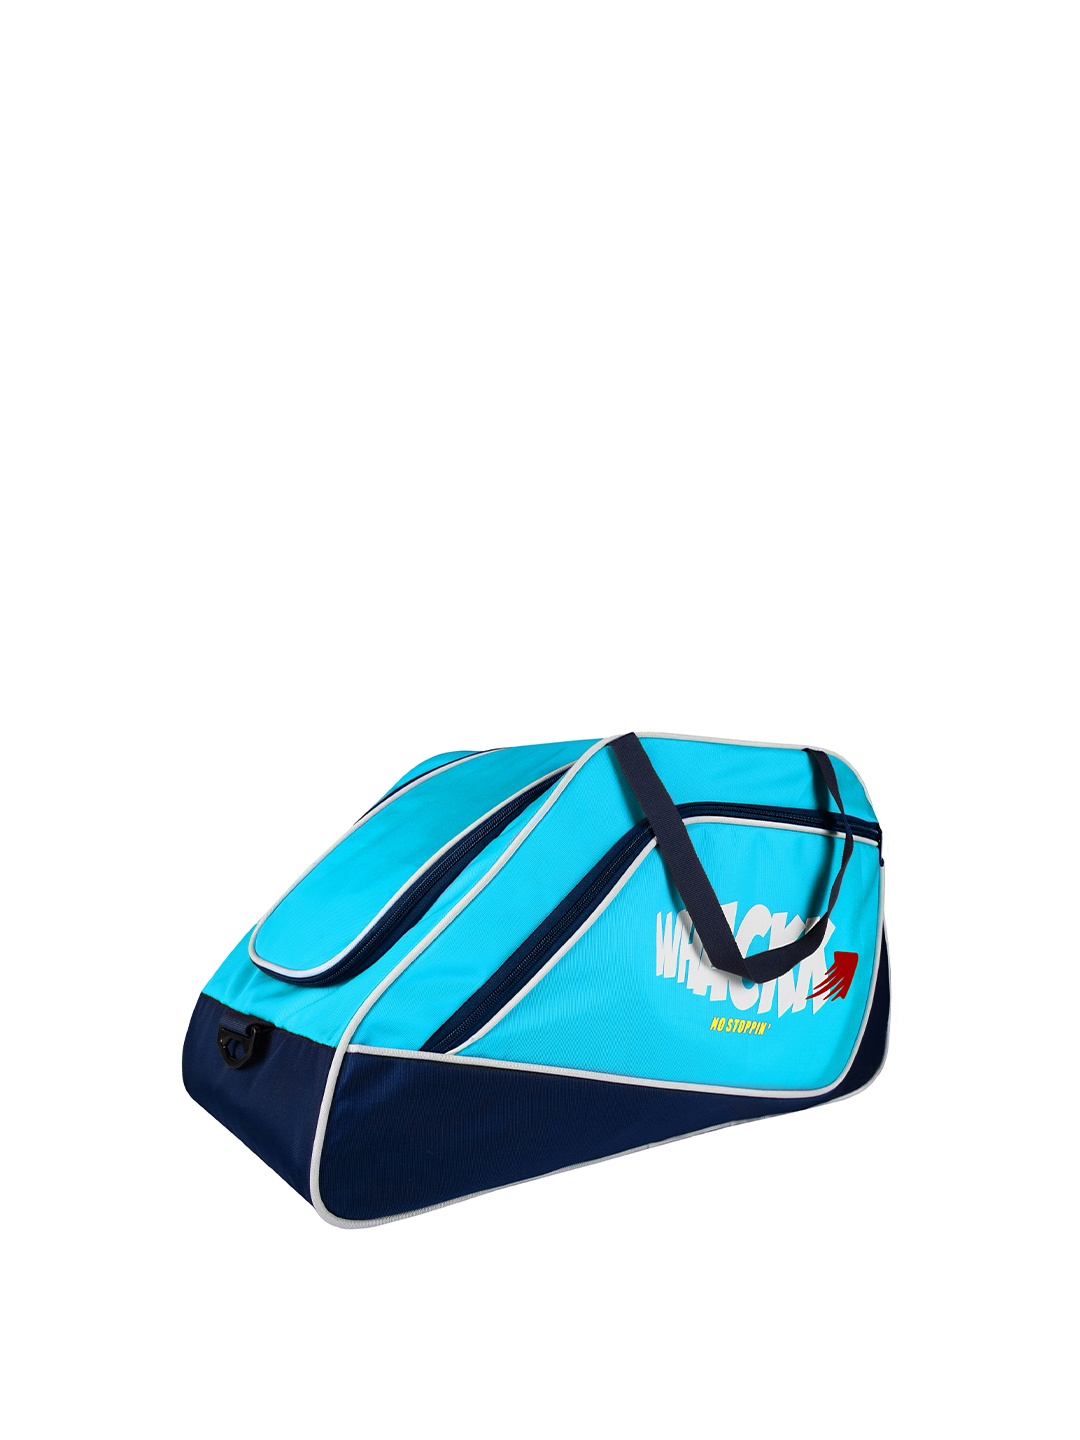 

Whackk Unisex Medium Gym Duffel Bag, Navy blue